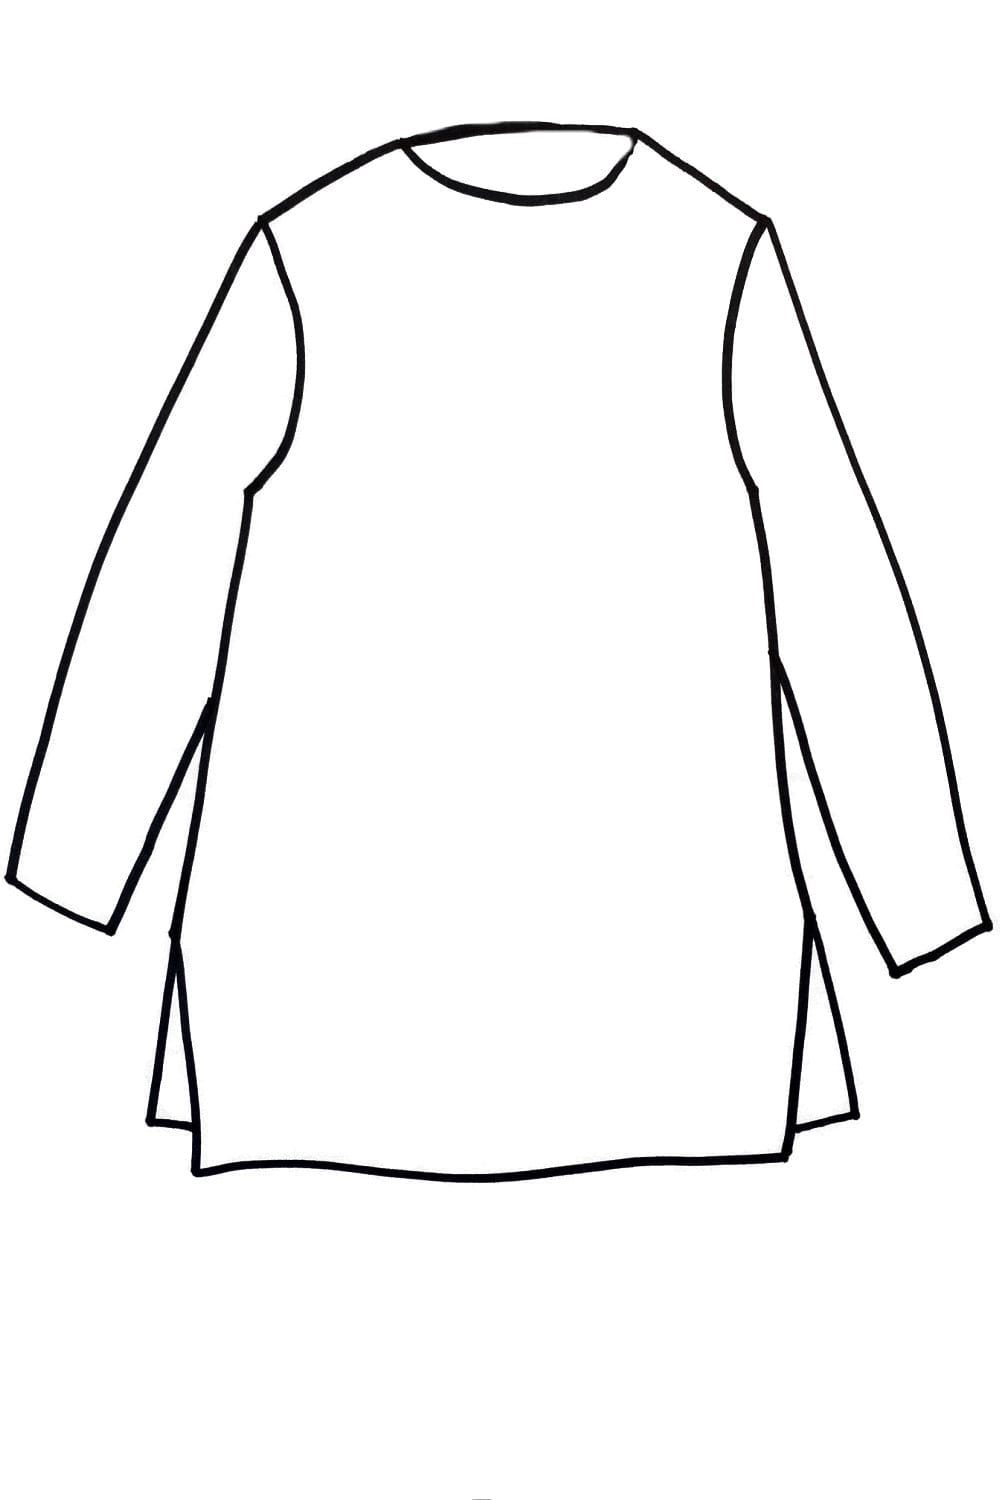 Line drawing of women's long sleeve aline cut tee.